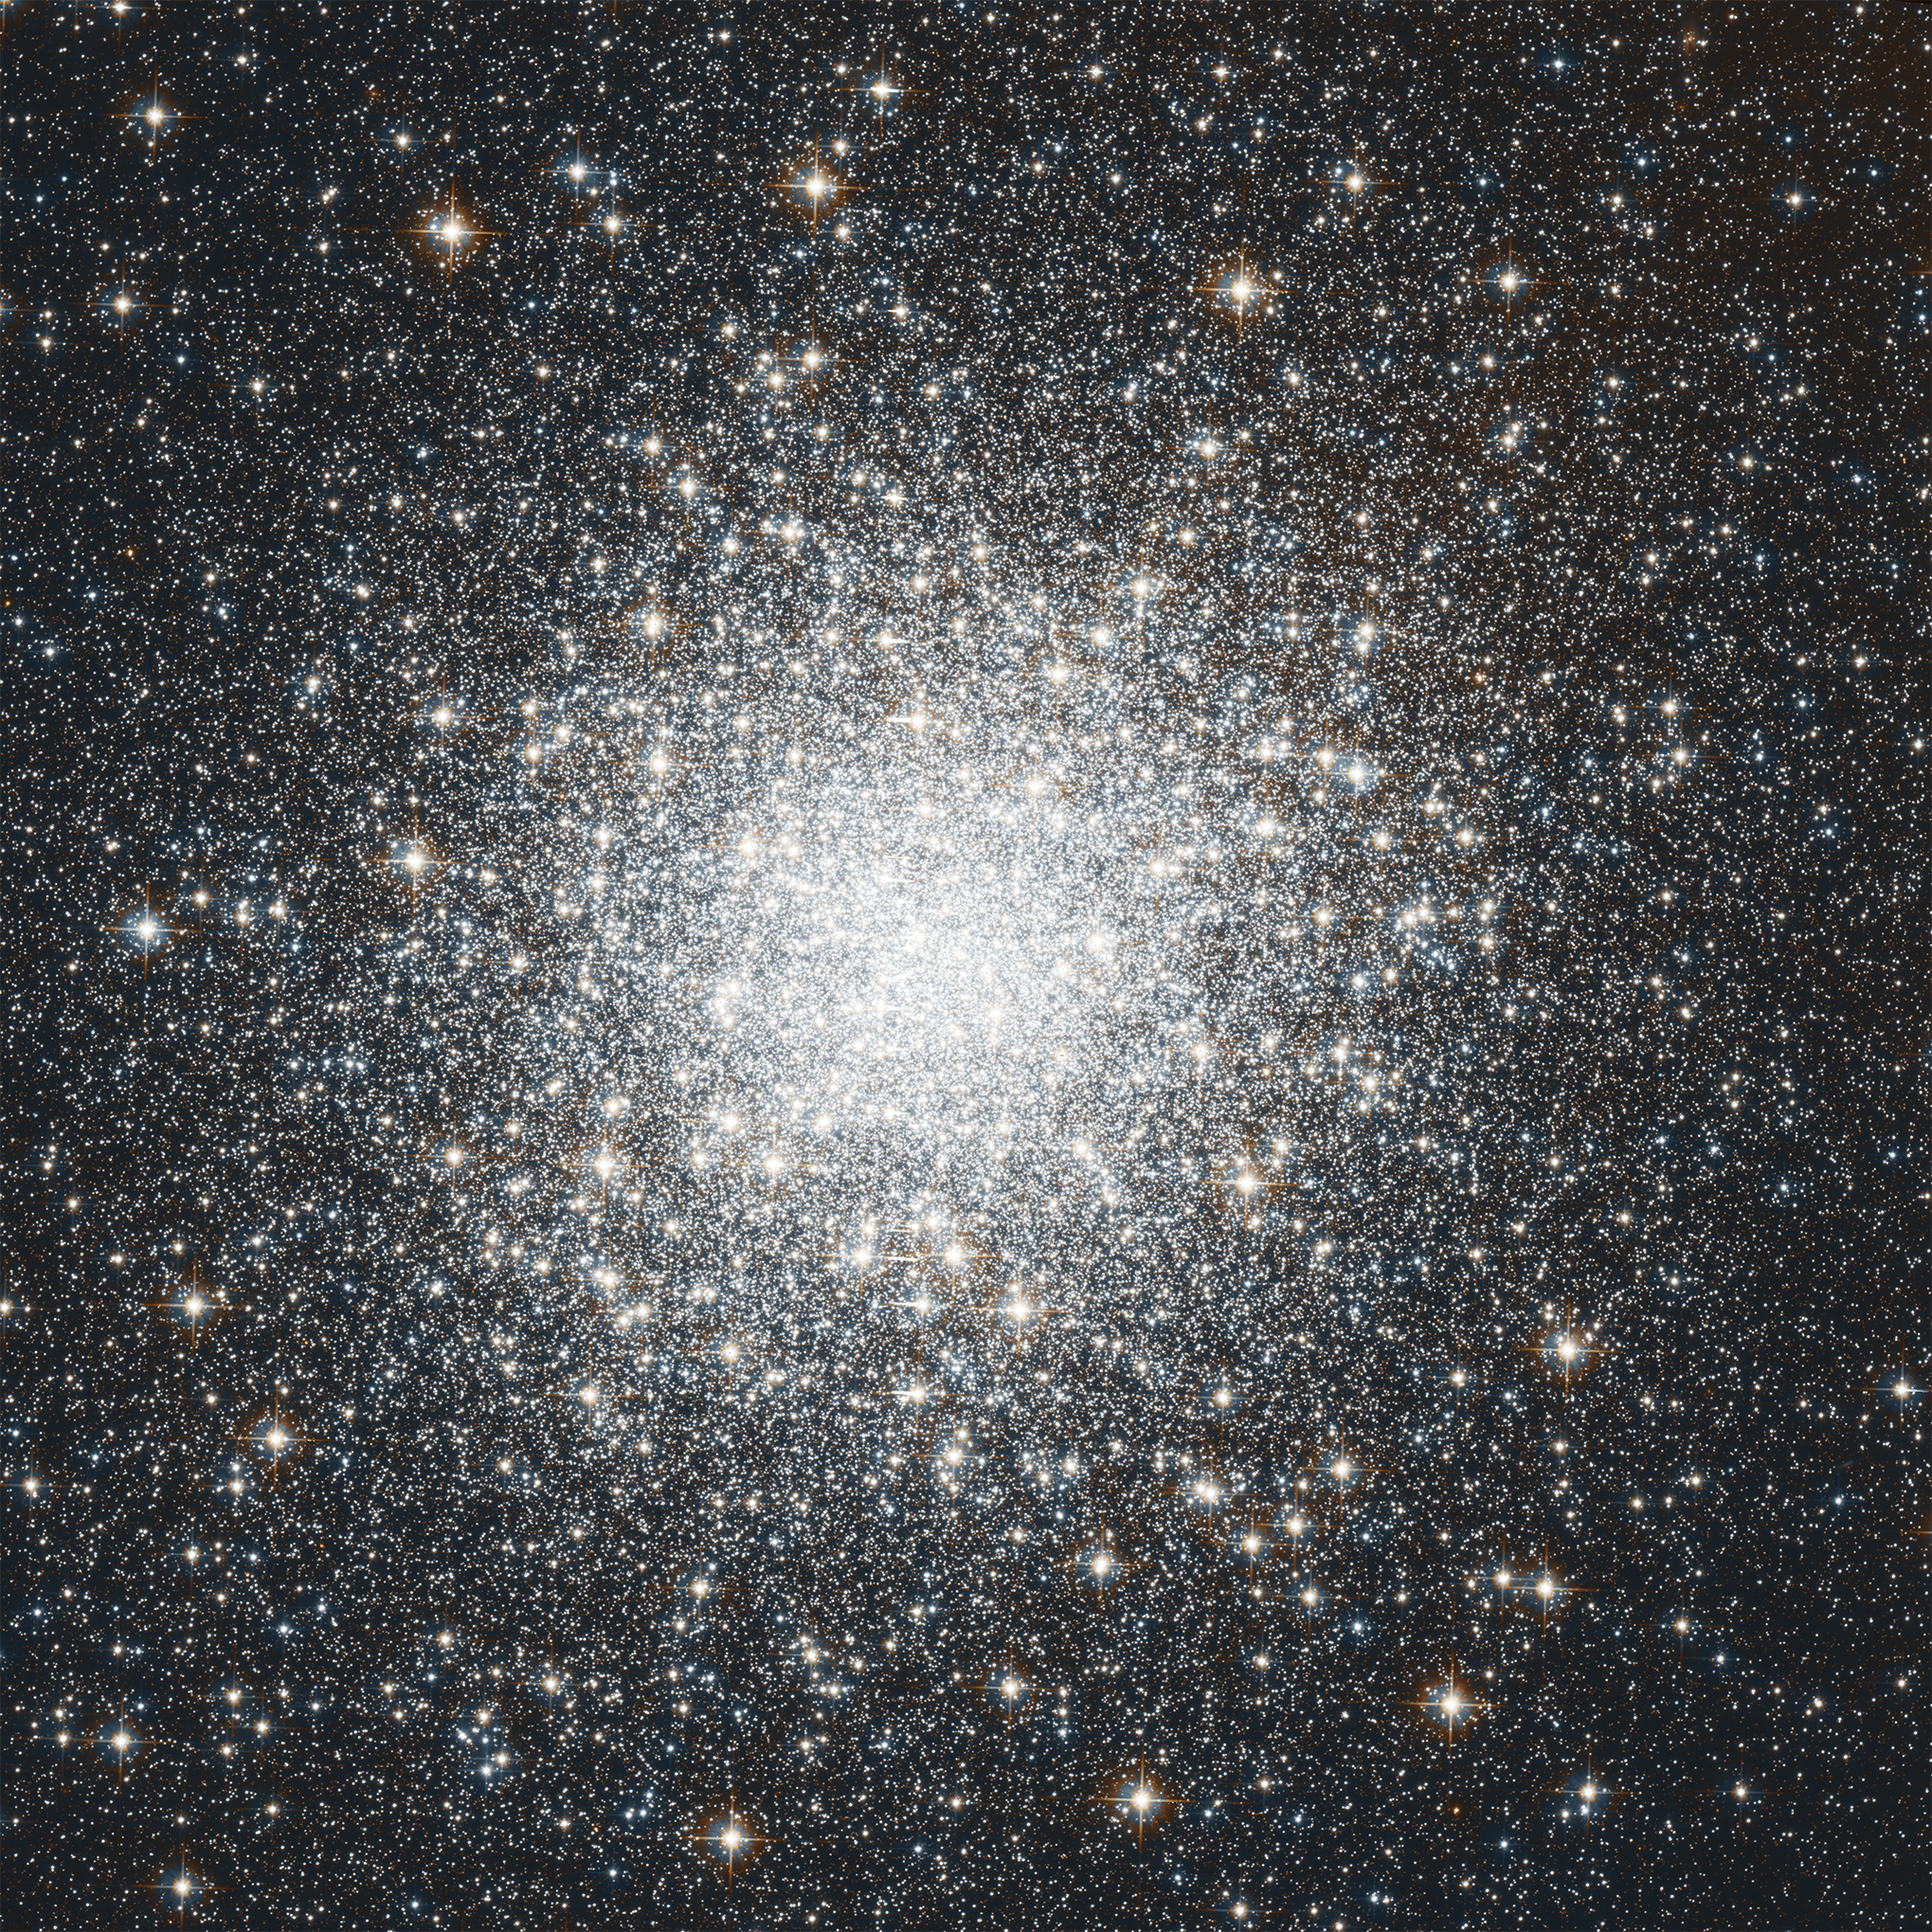 APOD: 2007 June 1 - Messier 65